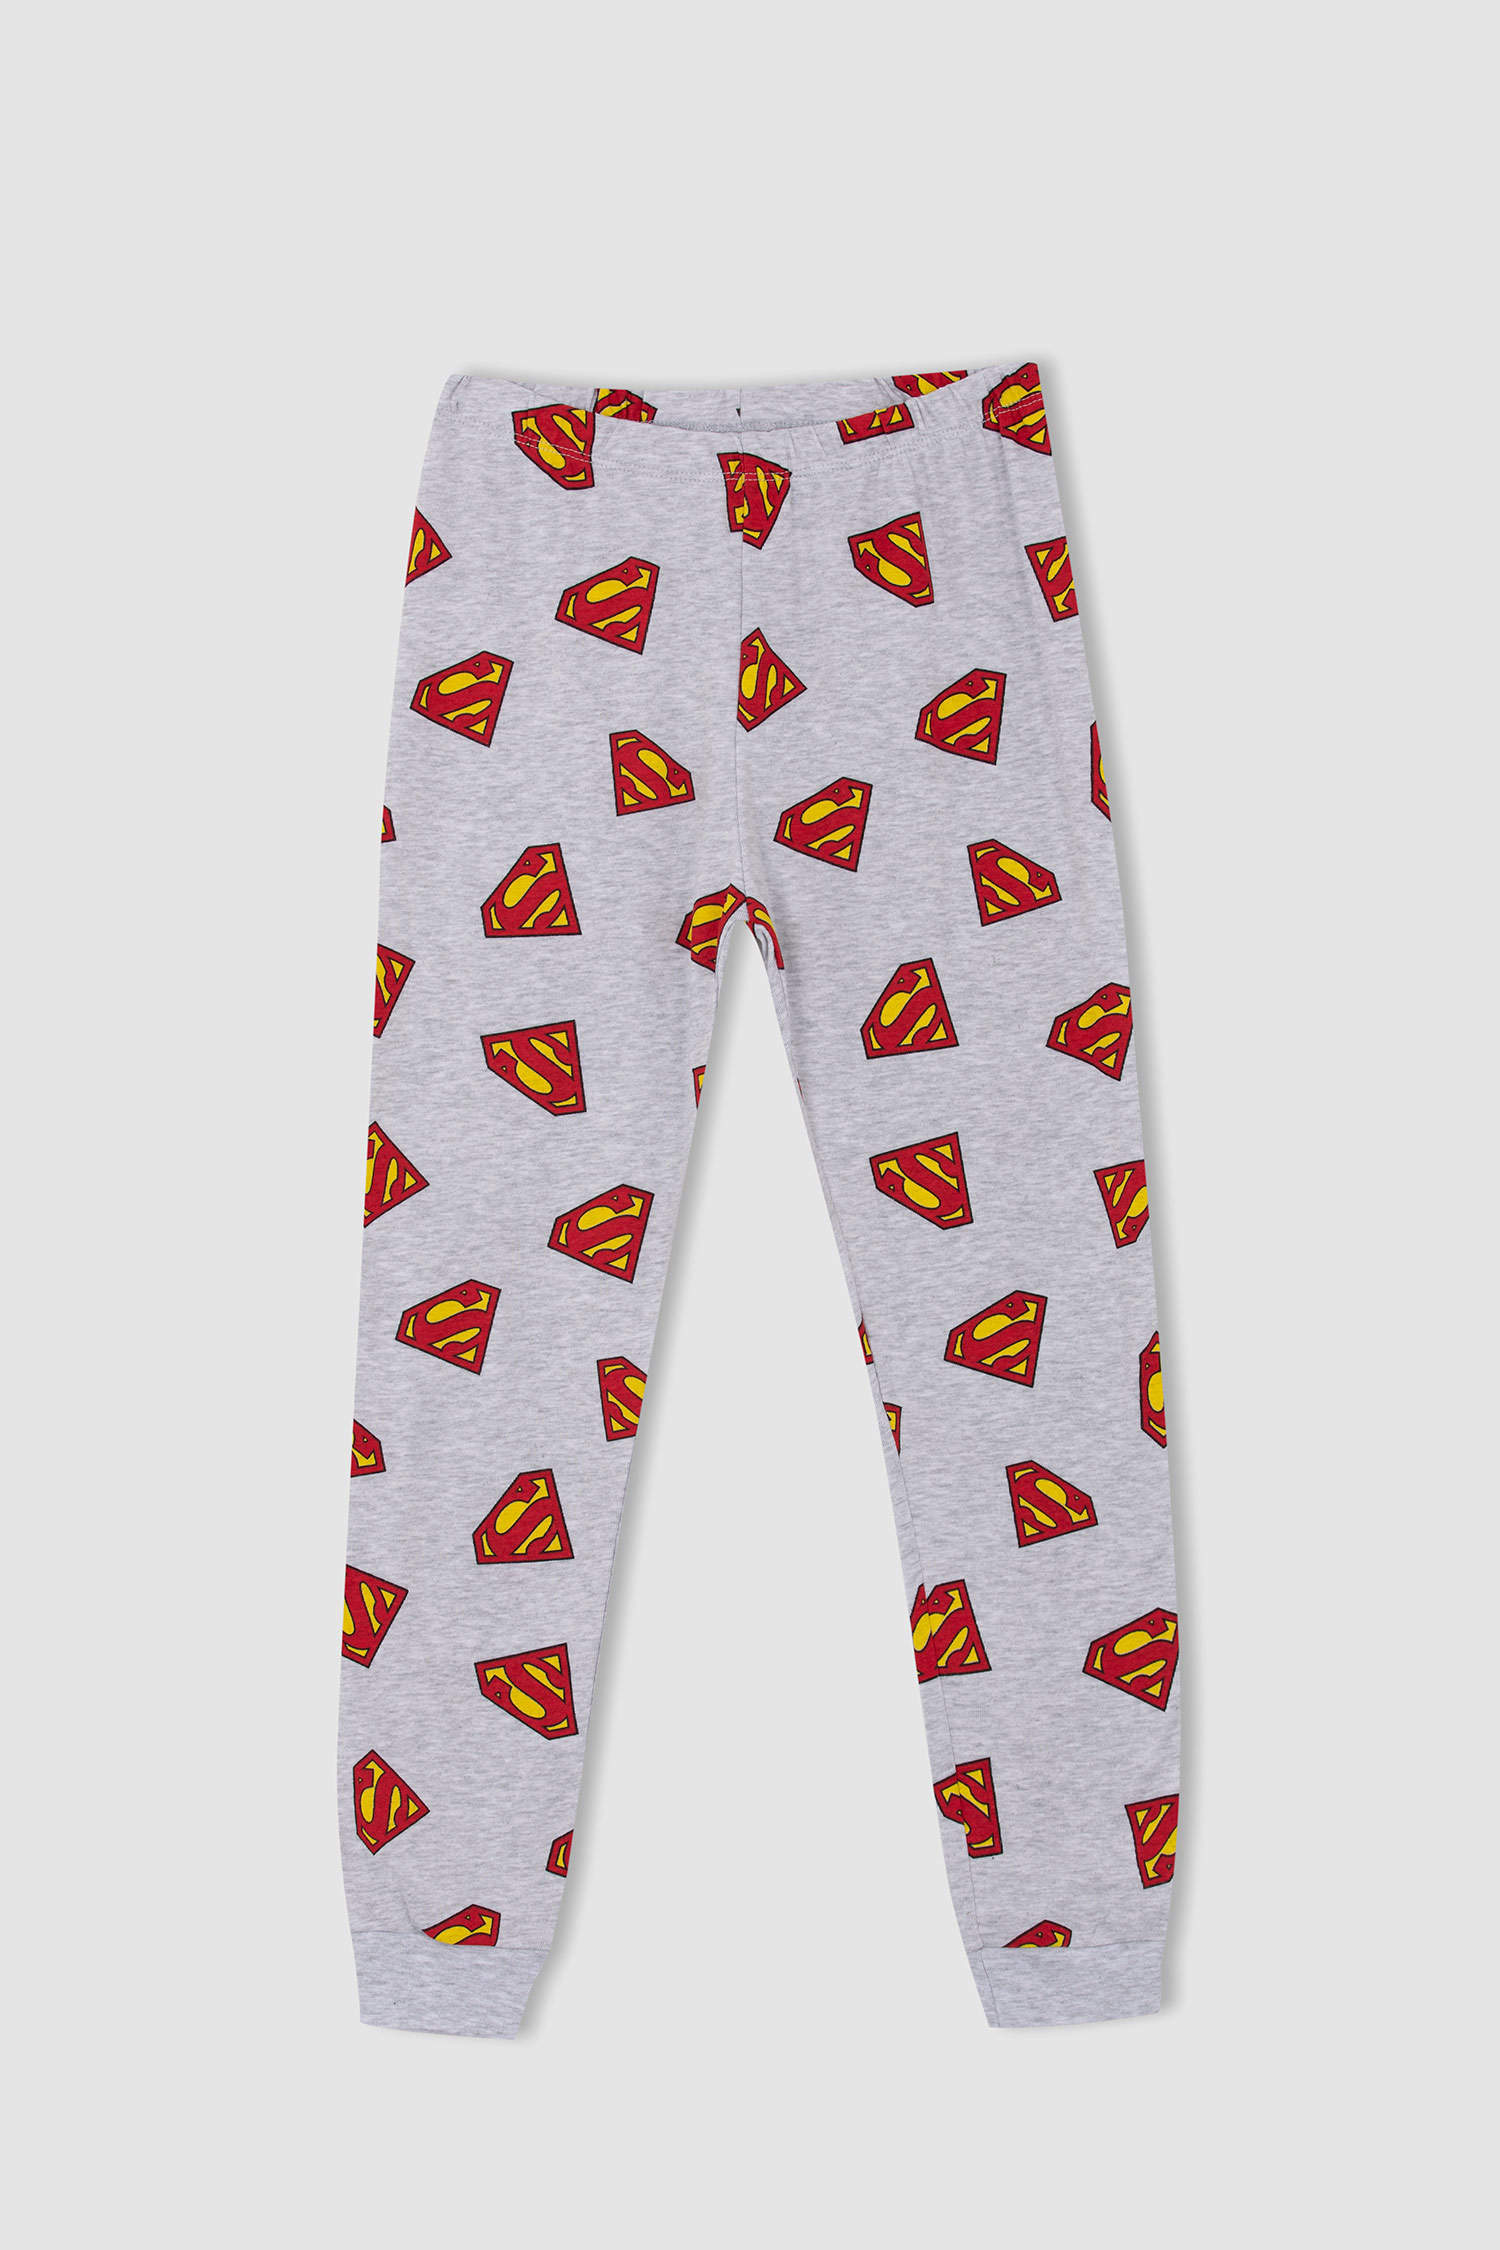 DC Comics Batman Superman + Pajama Lounge Pants Bottoms Size Small Waist  28-32” | eBay